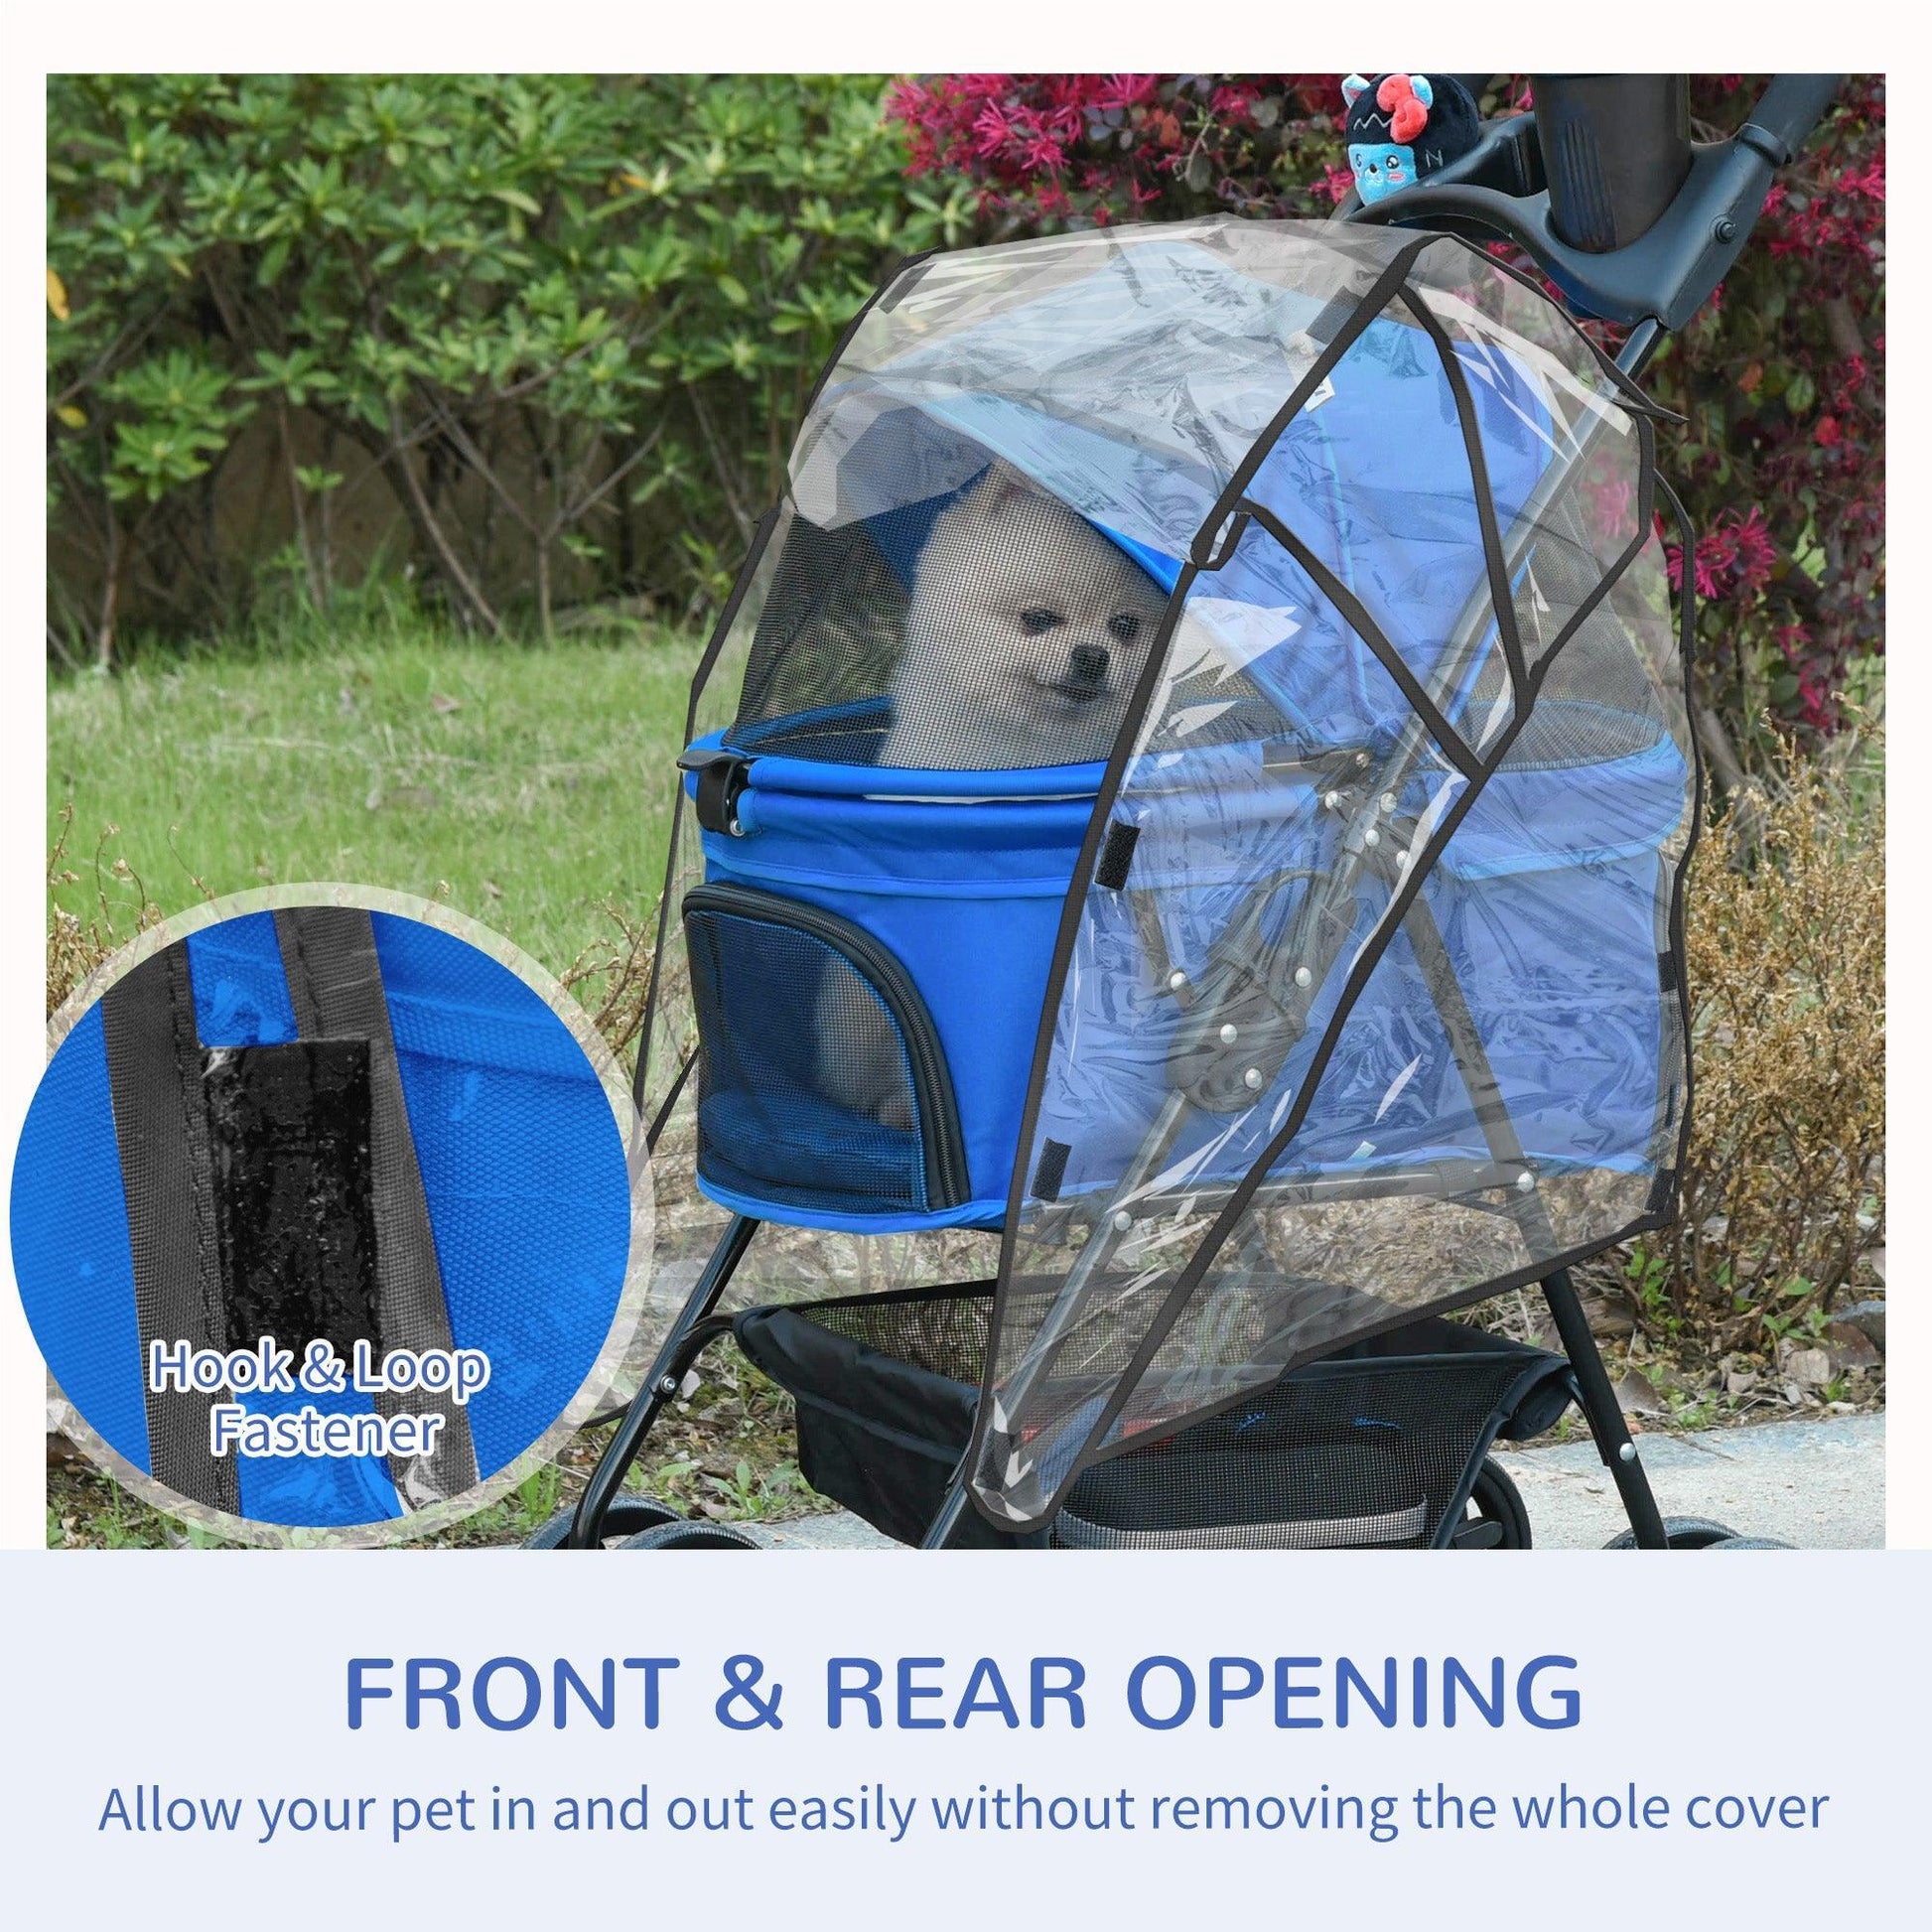 PawHut Dog Stroller with Rain Cover, Blue - ALL4U RETAILER LTD